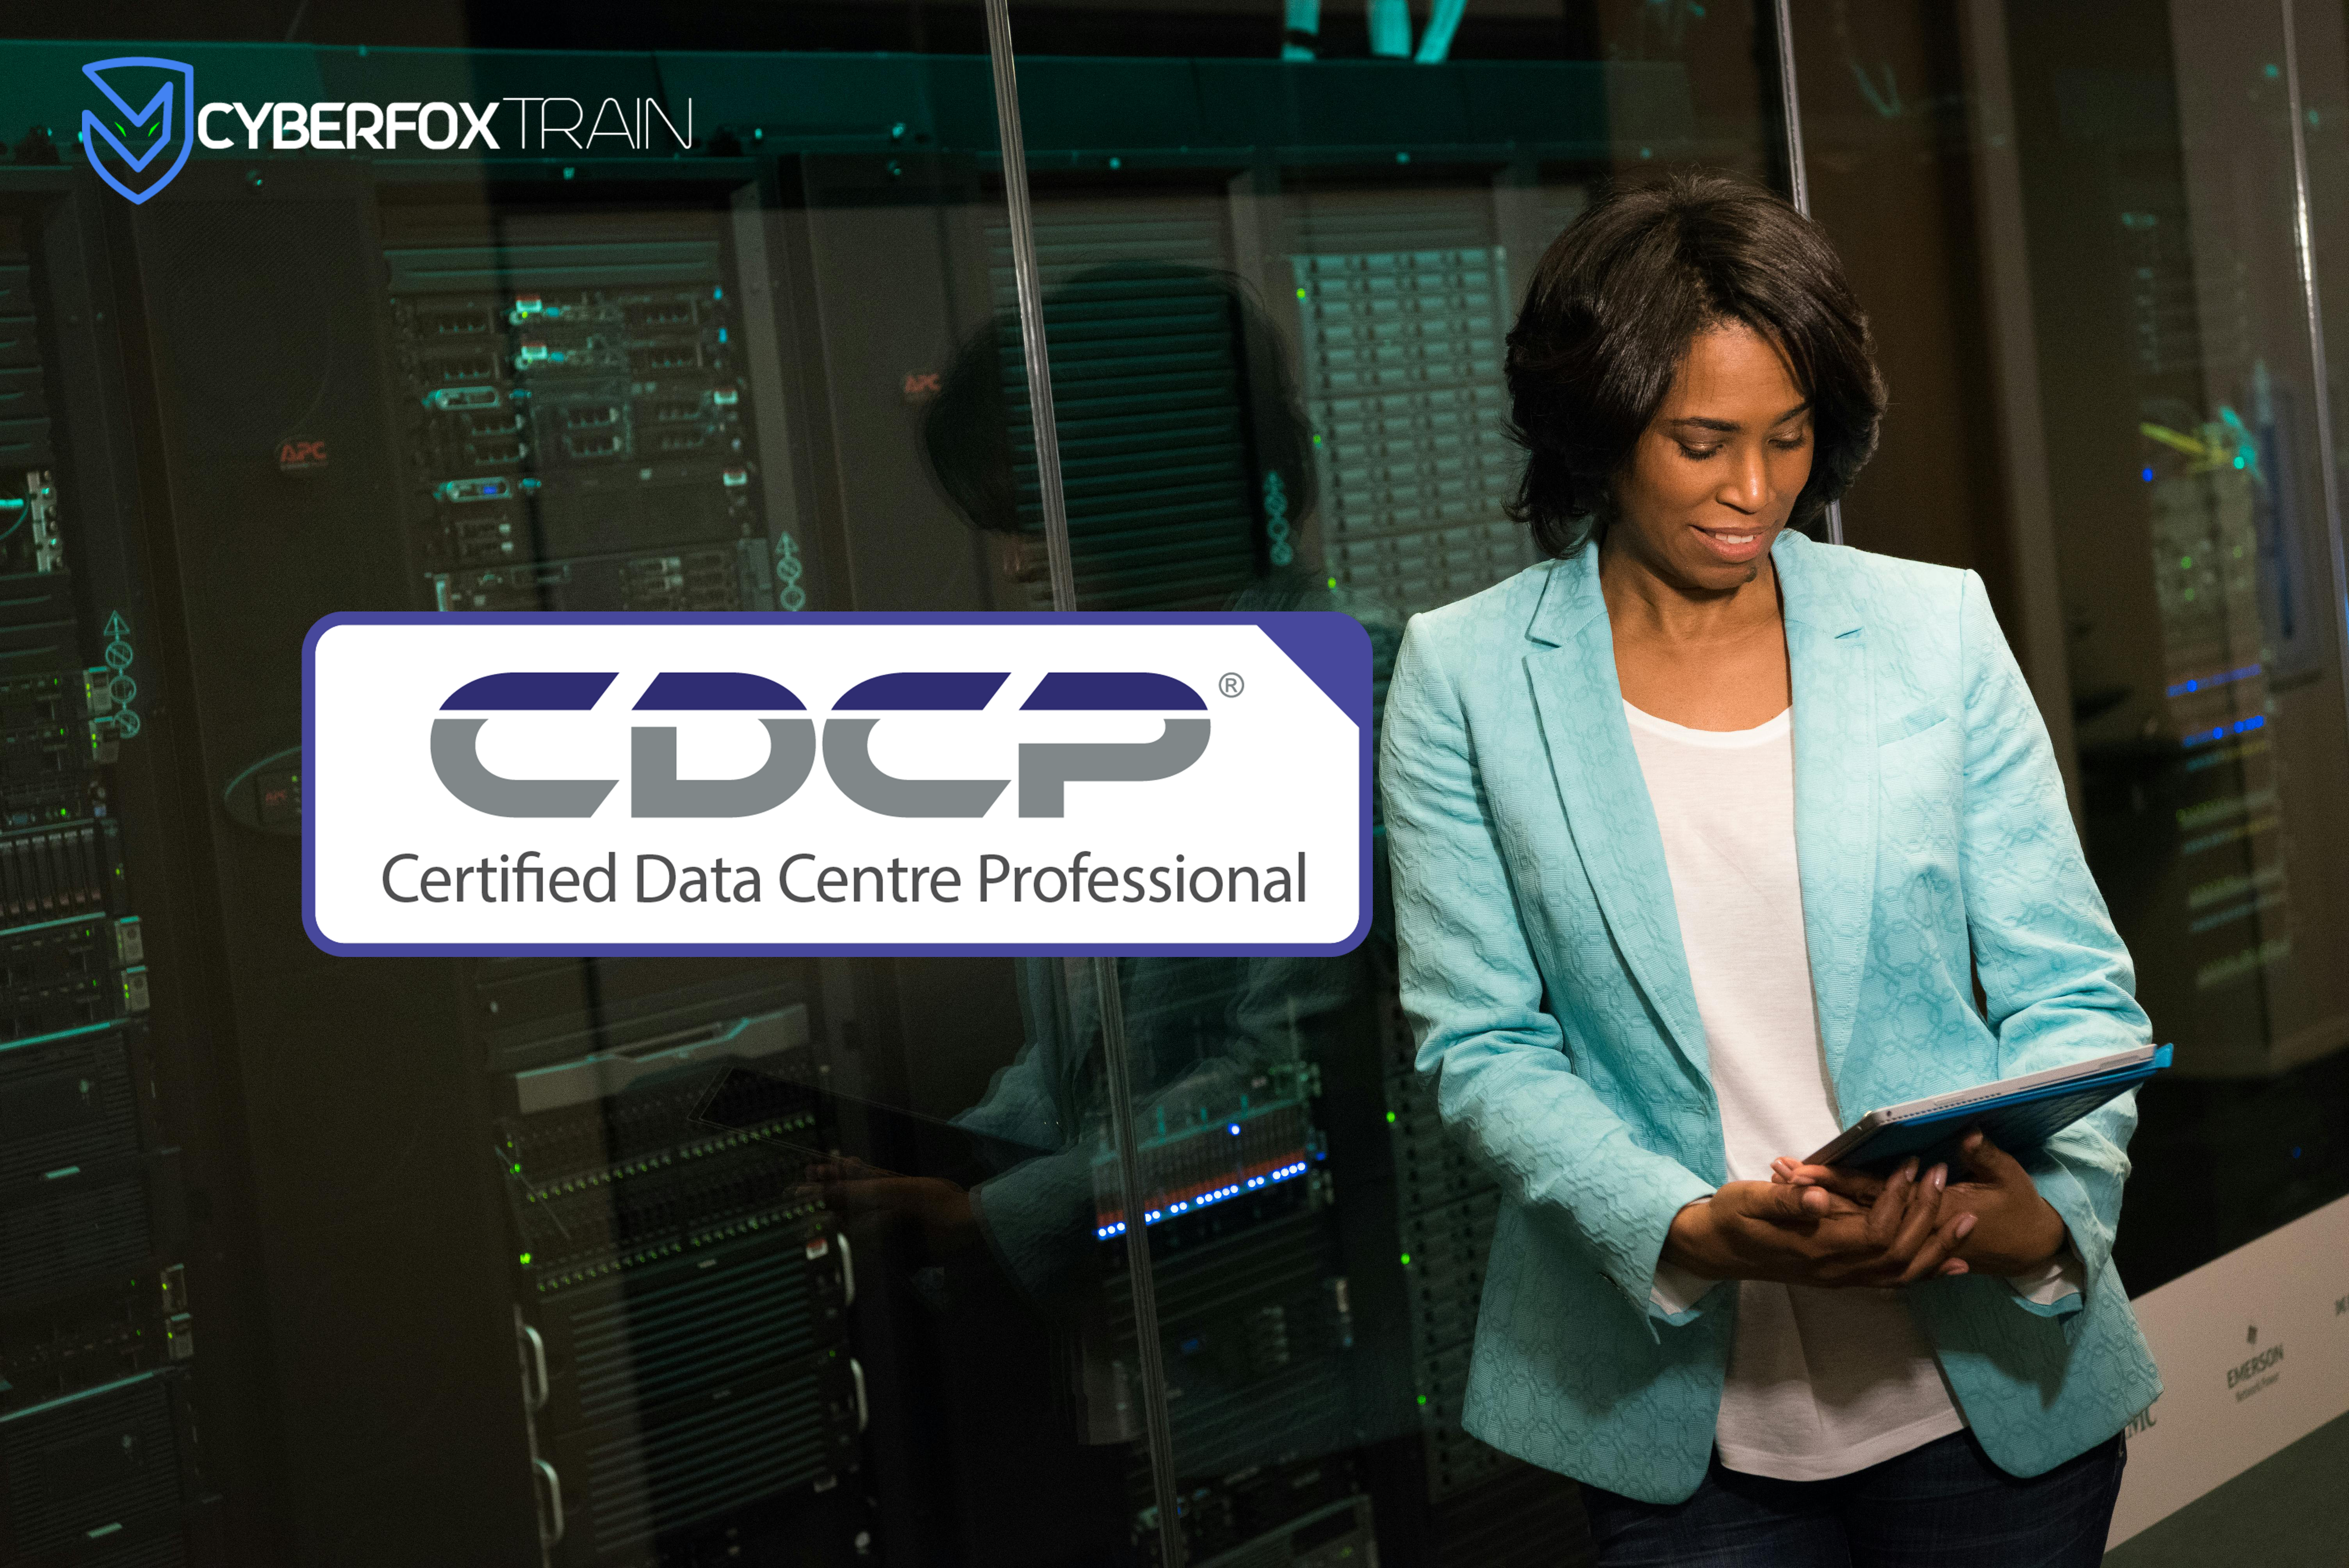 Certified Data Centre Professional (CDCP) – CyberFox Train